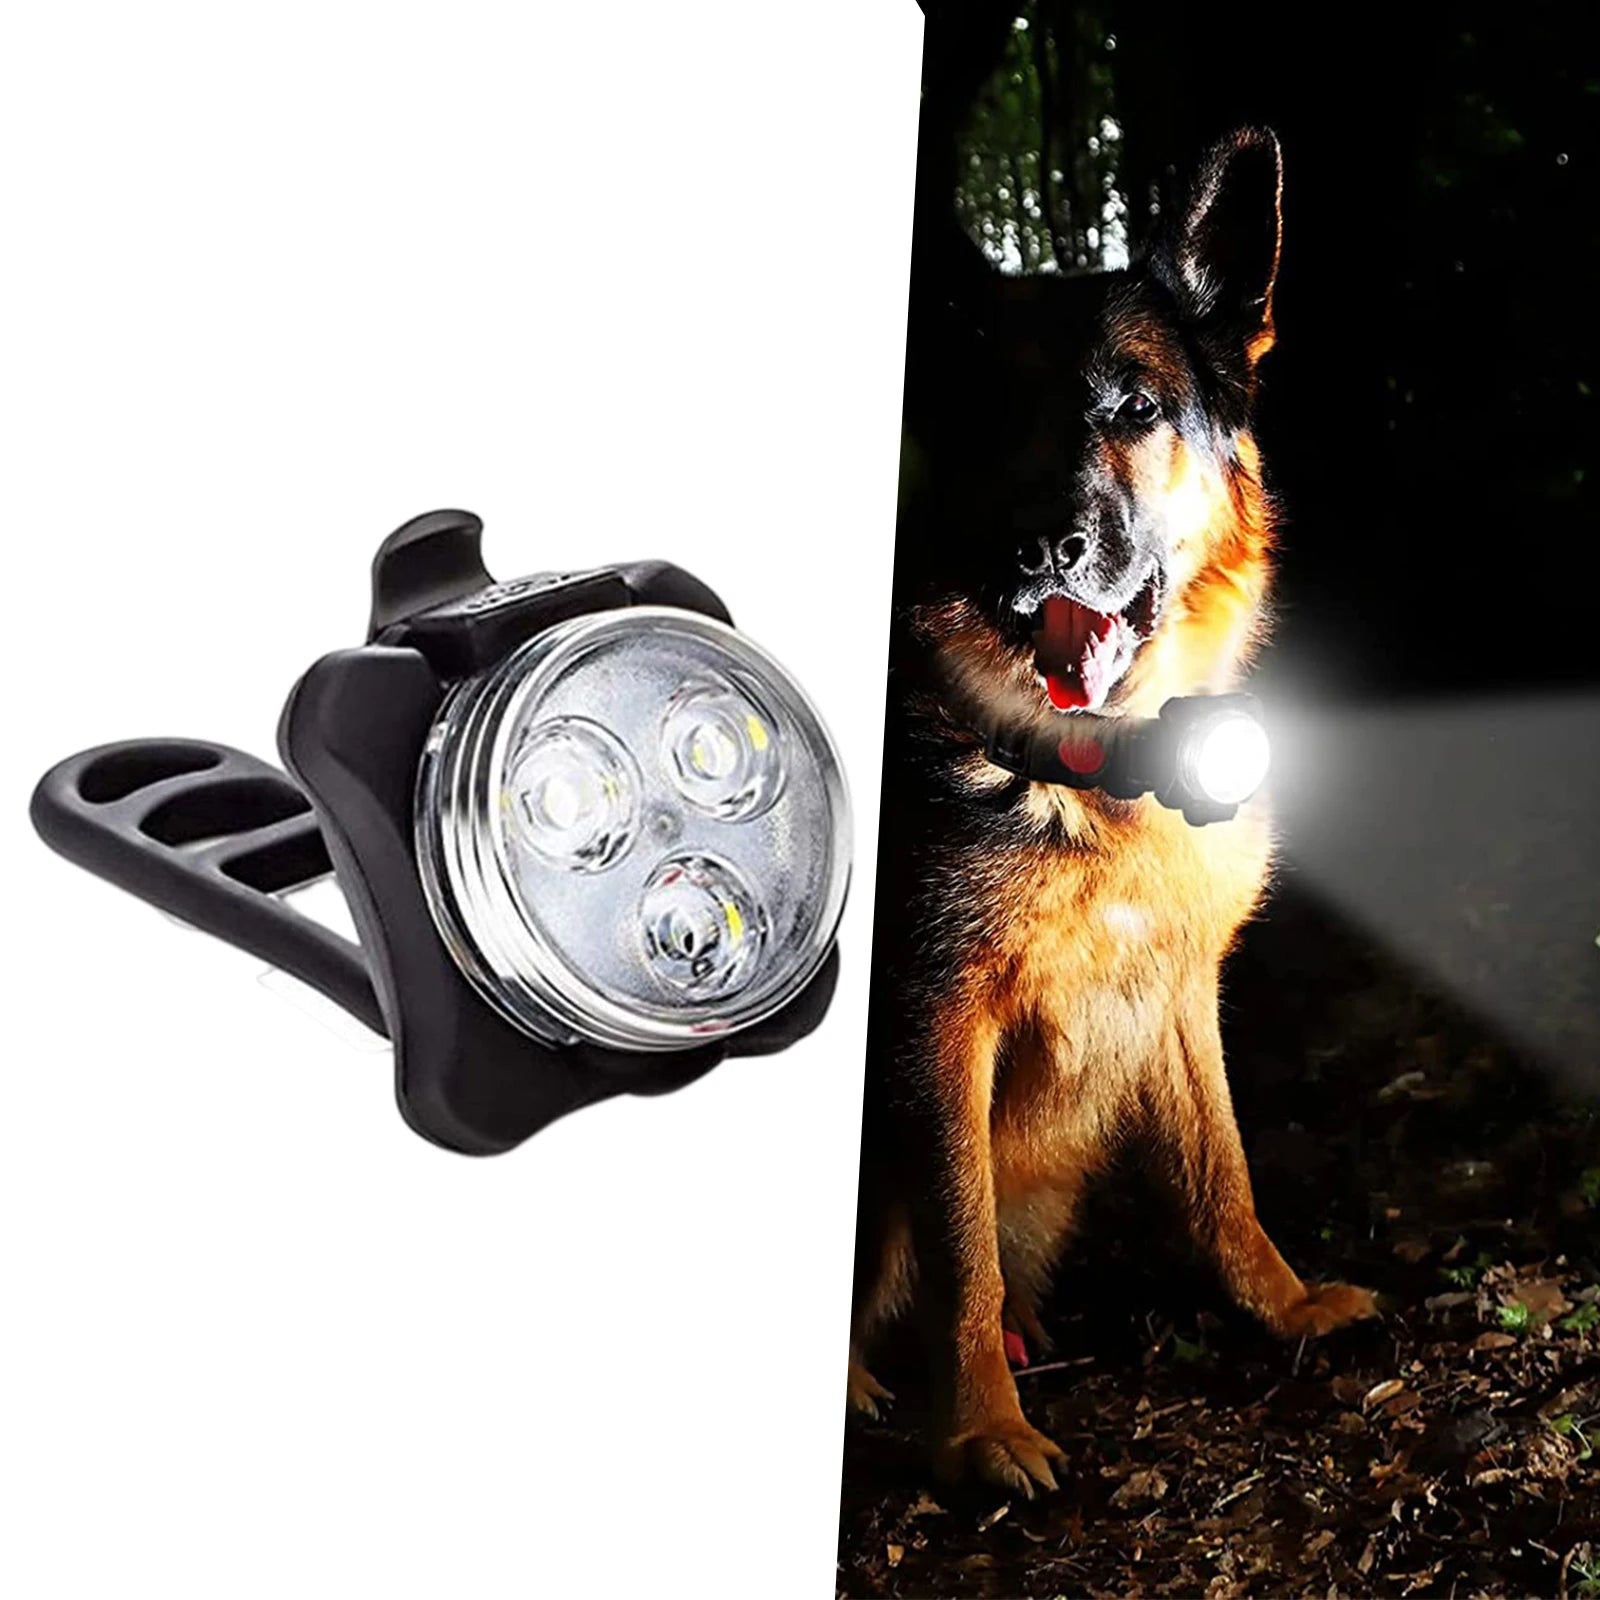 Collare Cane Luce LED Sicurezza Luce Impermeabile Ricaricabile Regolabile Accessori Animali Domestici - PELOSAMICI